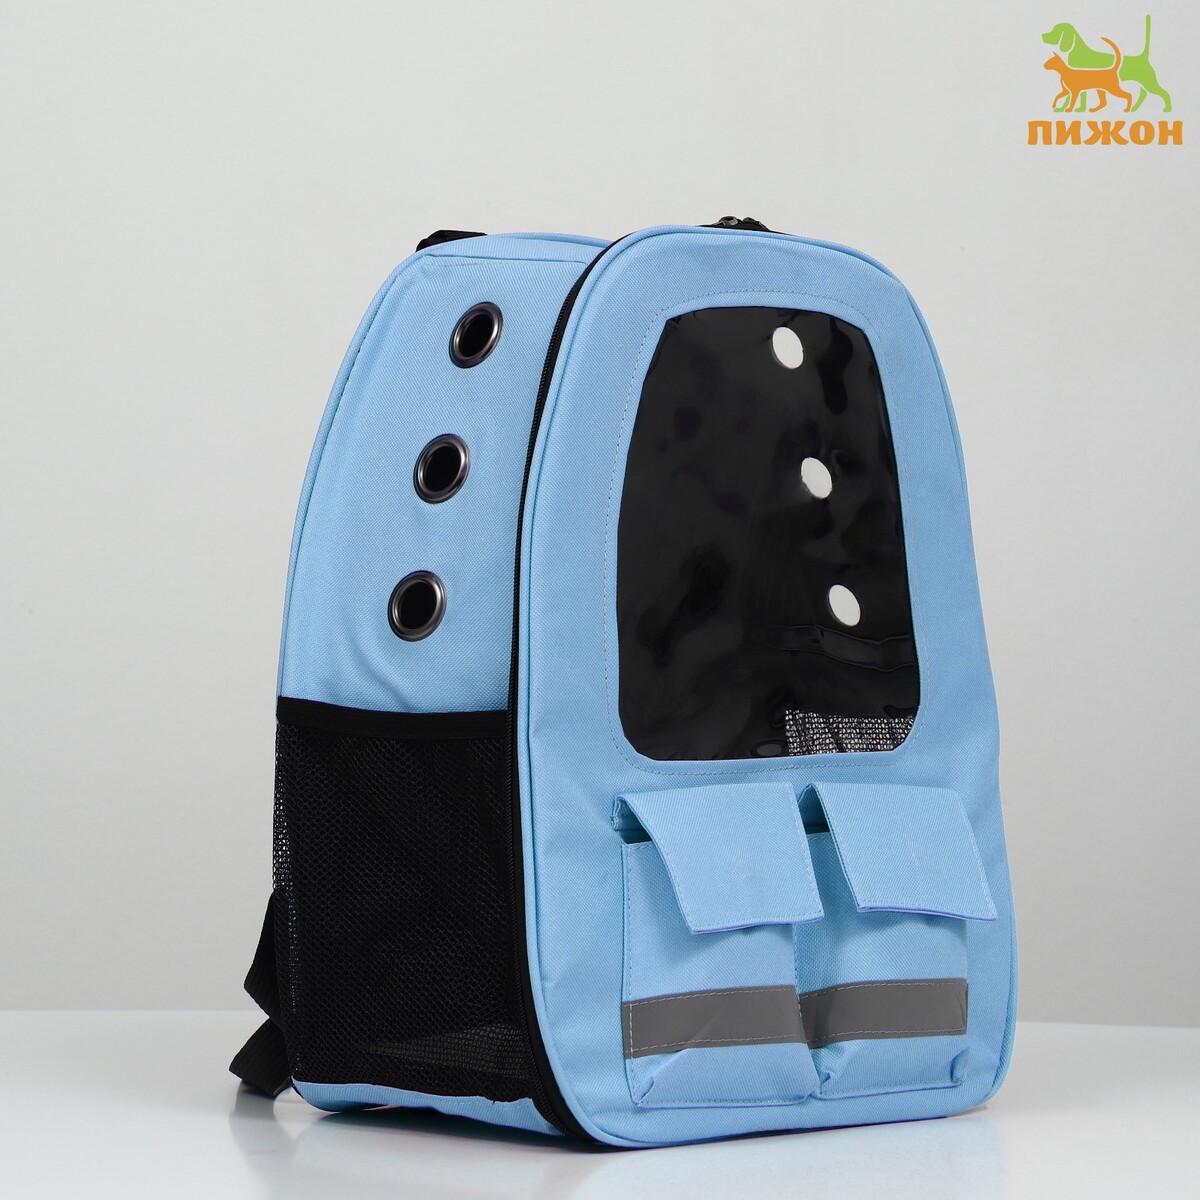 Рюкзак для переноски животных с окном для обзора, голубой рюкзак для переноски животных с окном для обзора 32 х 25 х 42 см серебристо